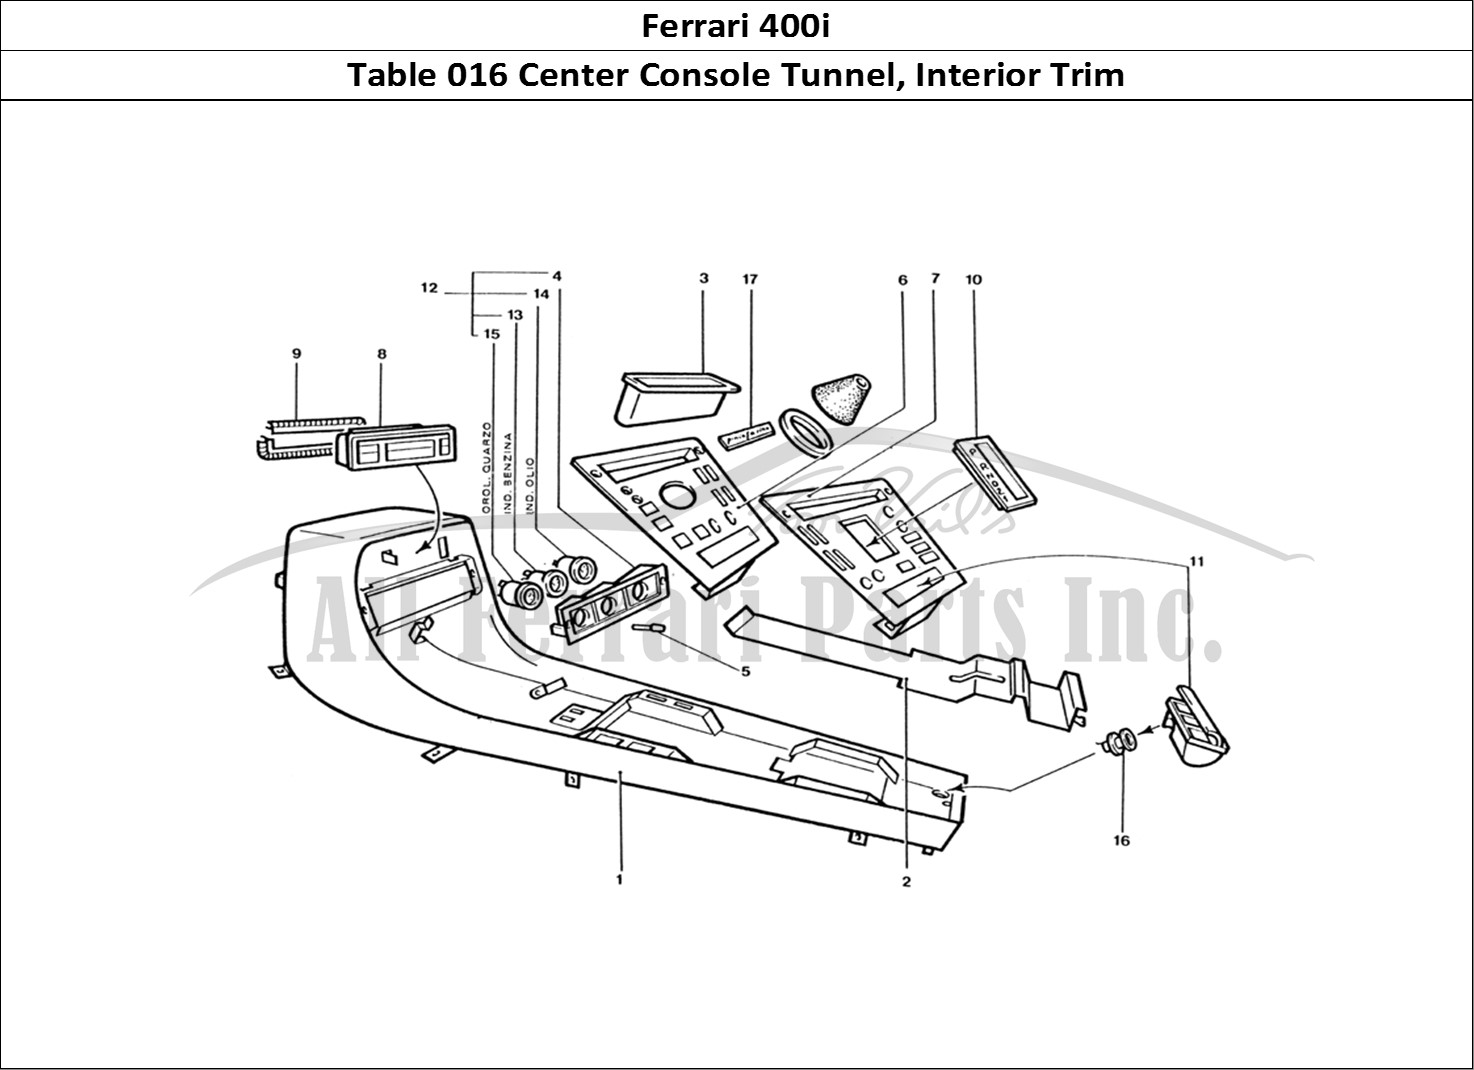 Ferrari Parts Ferrari 400 GT (Coachwork) Page 016 Inner center console pane